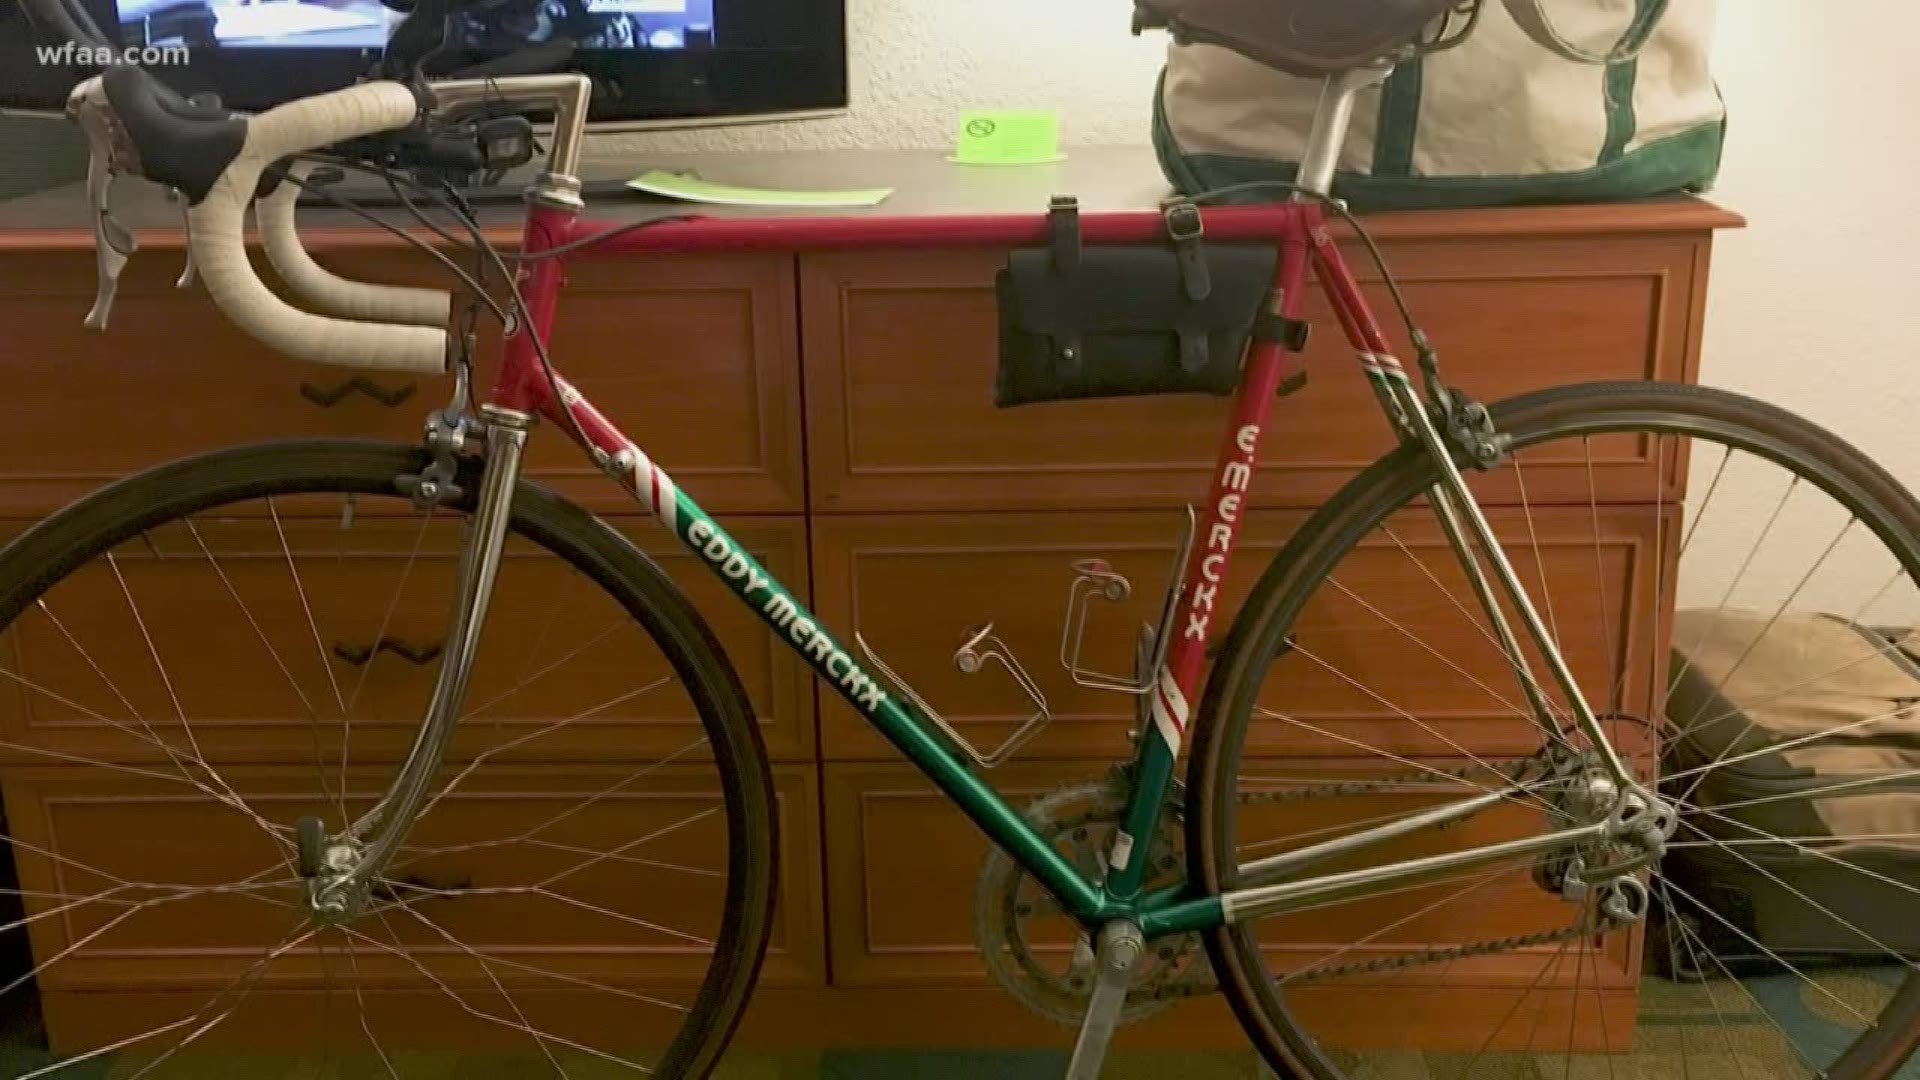 Man hoping to find stolen bike with sentimental value